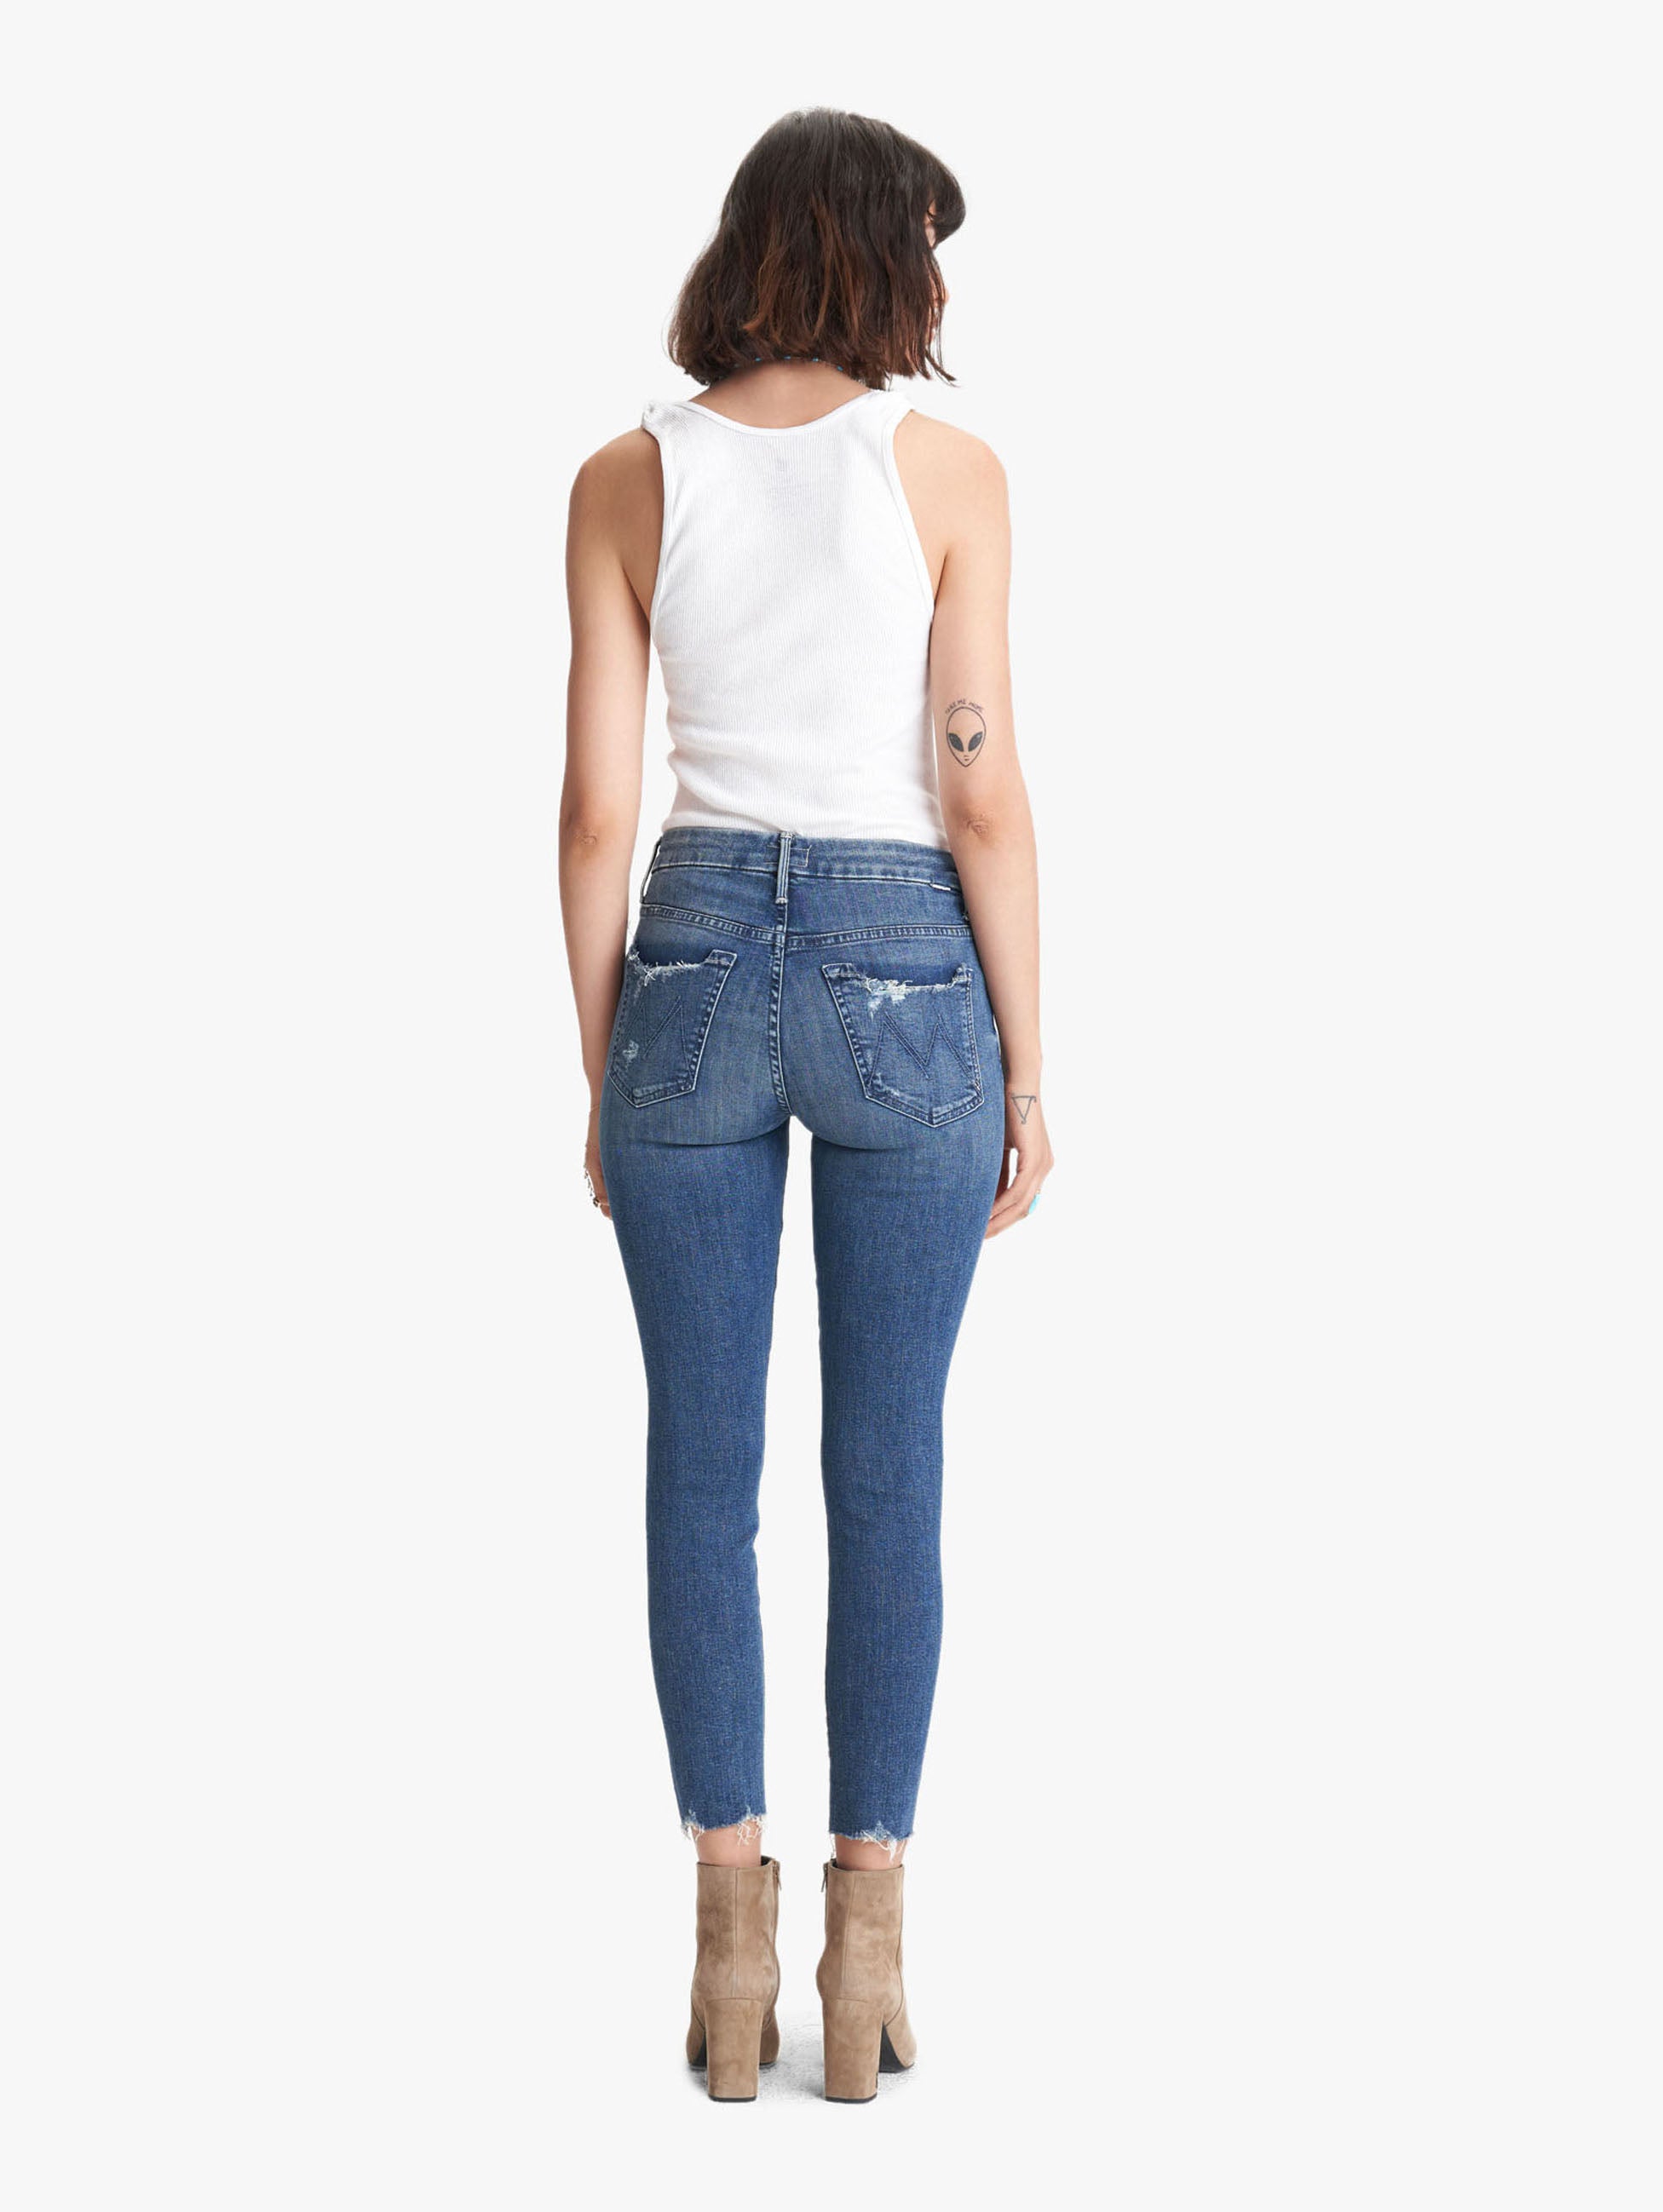 ladies jeans pants online shopping